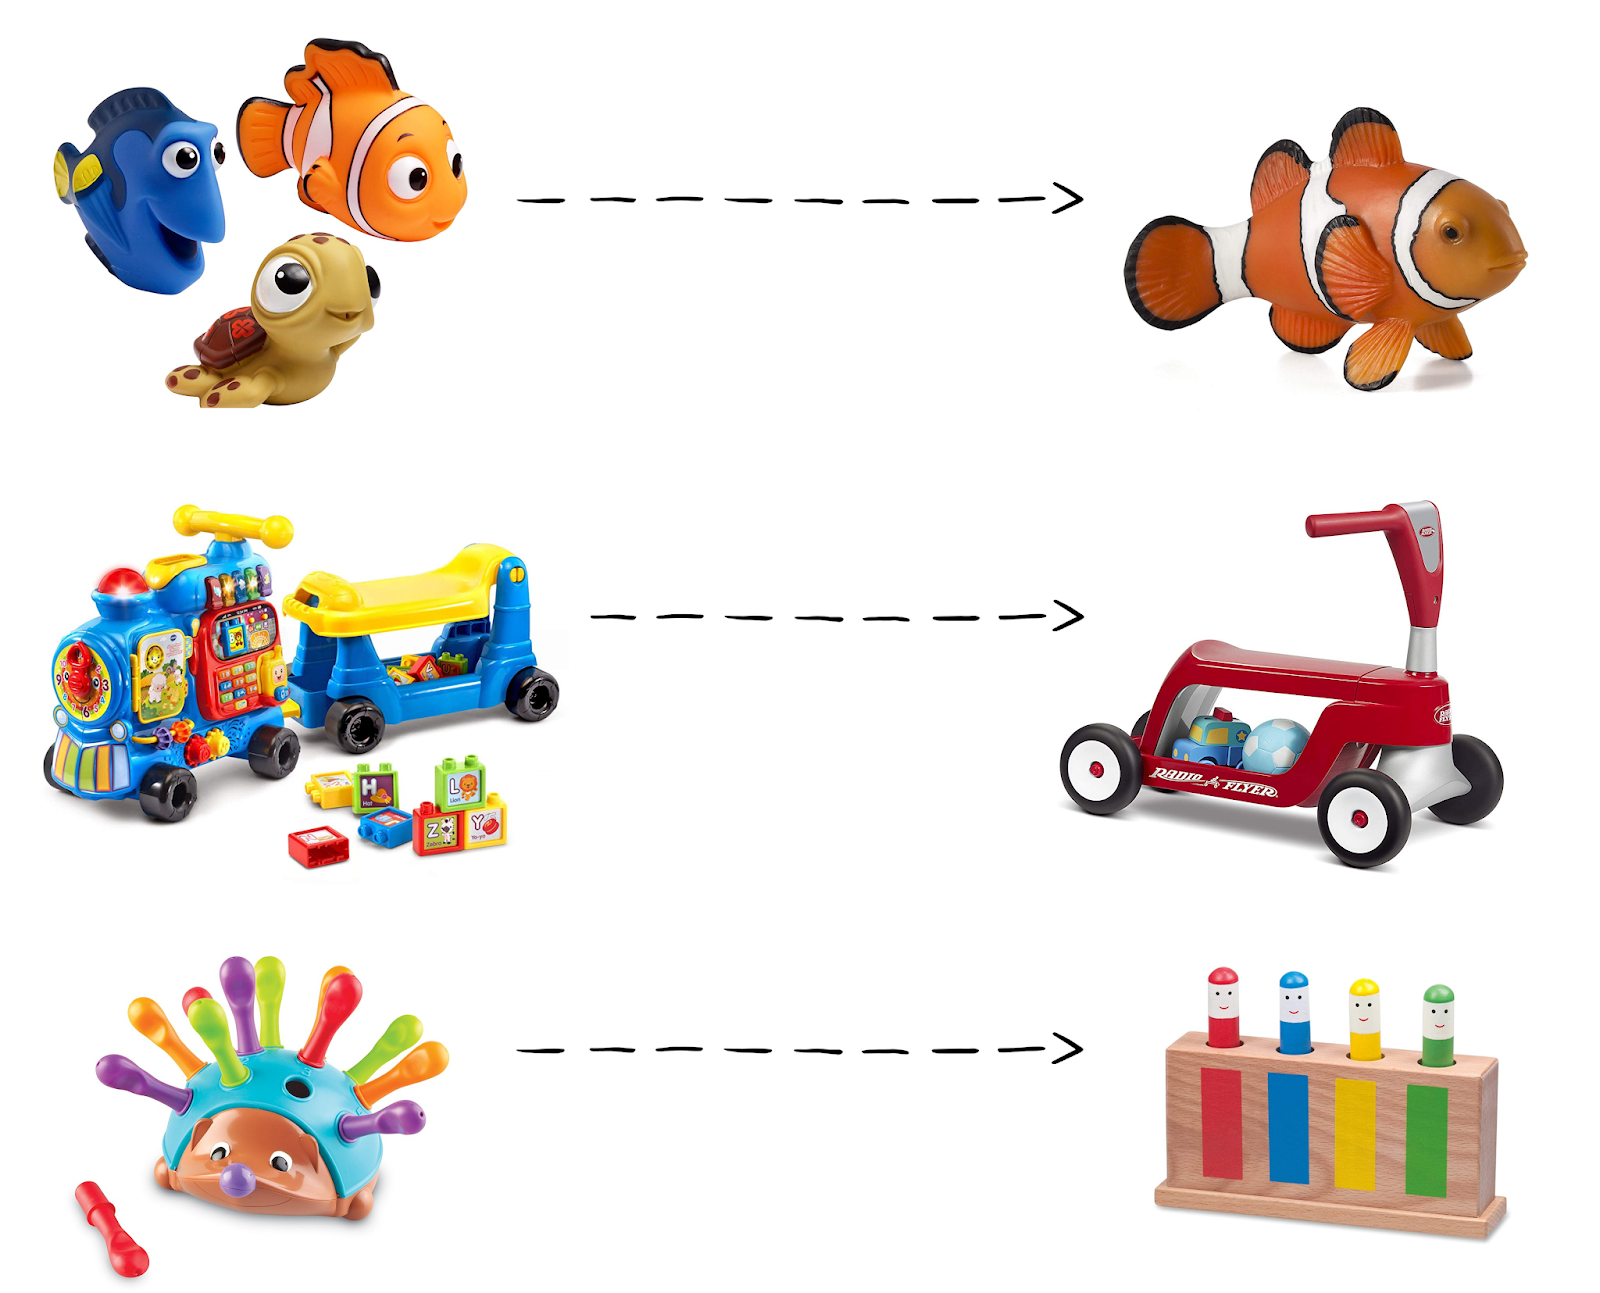 Montessori friendly alternatives to popular baby toys